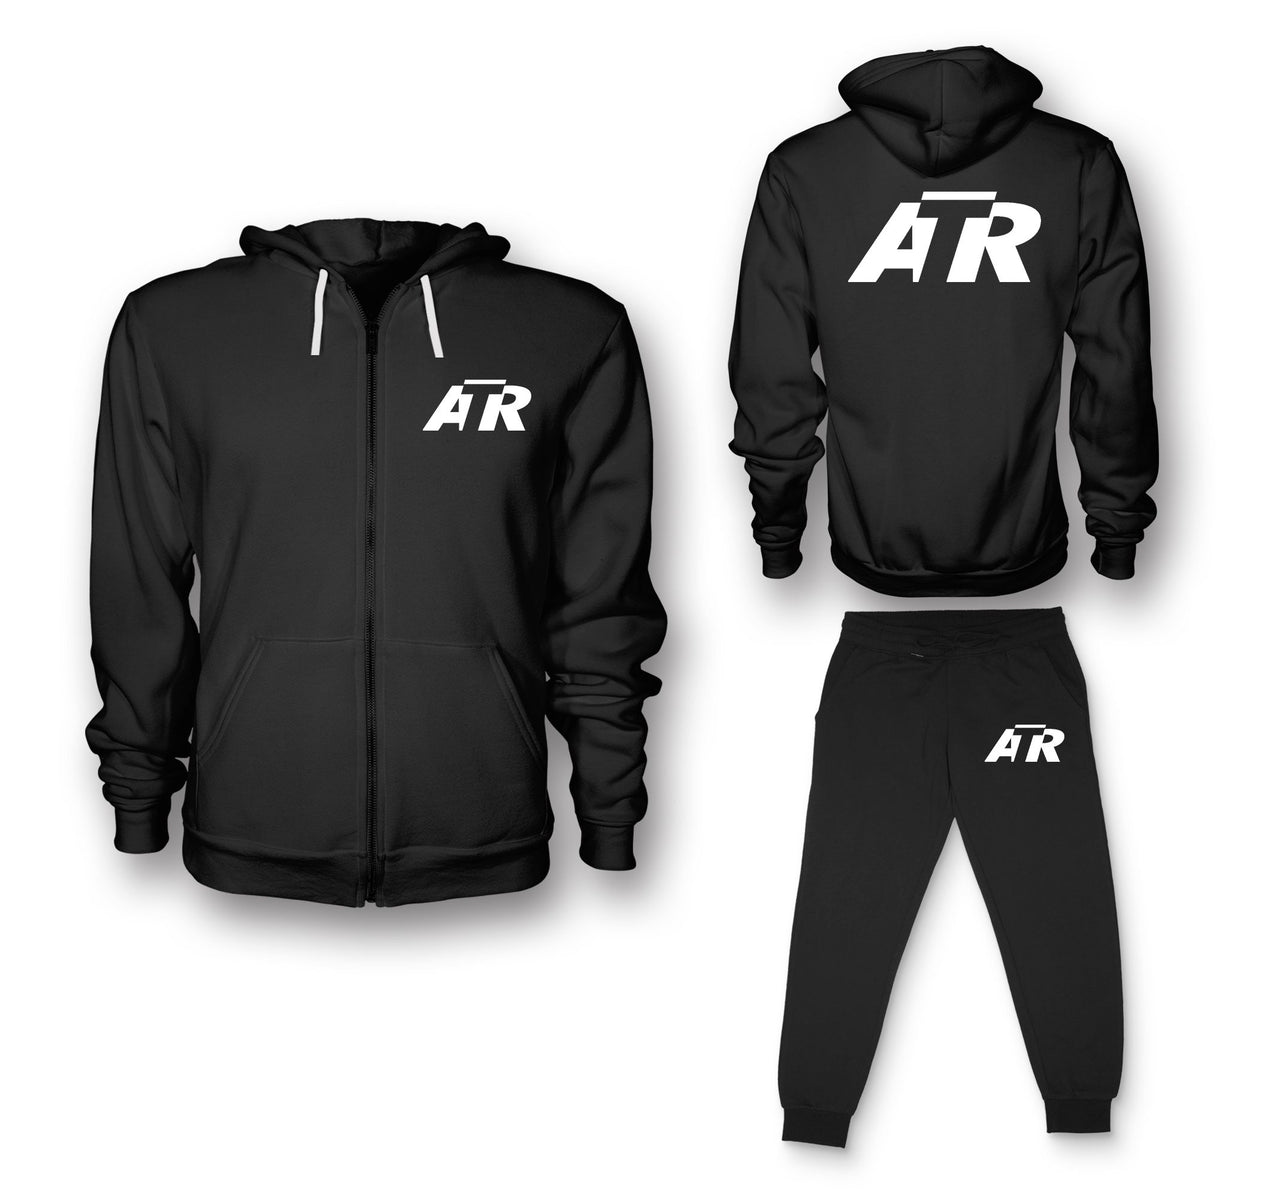 ATR & Text Designed Zipped Hoodies & Sweatpants Set